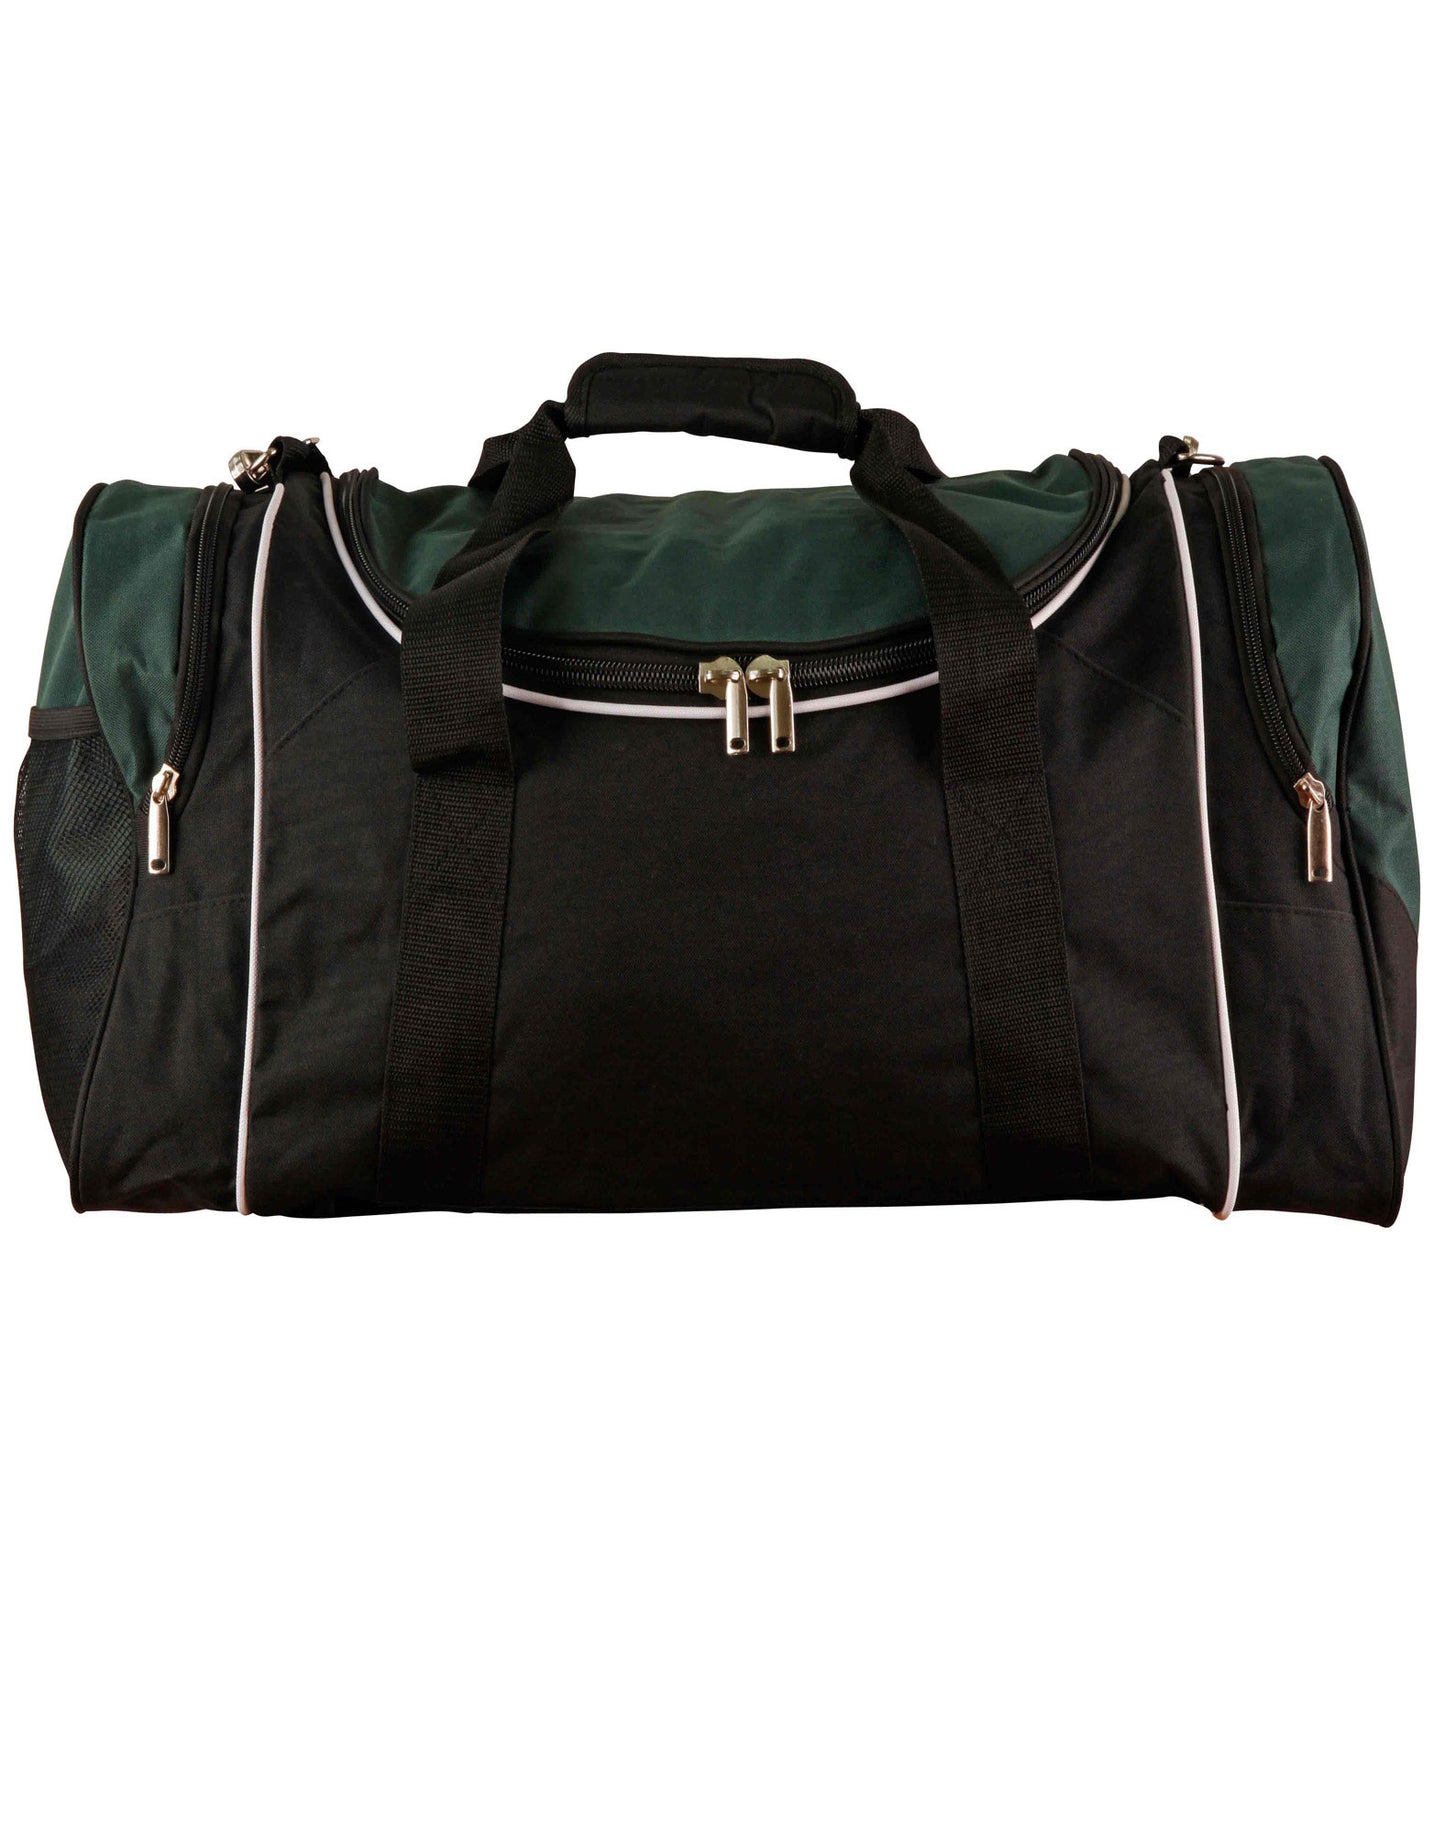 Winner Sports Duffle Bag | B2020